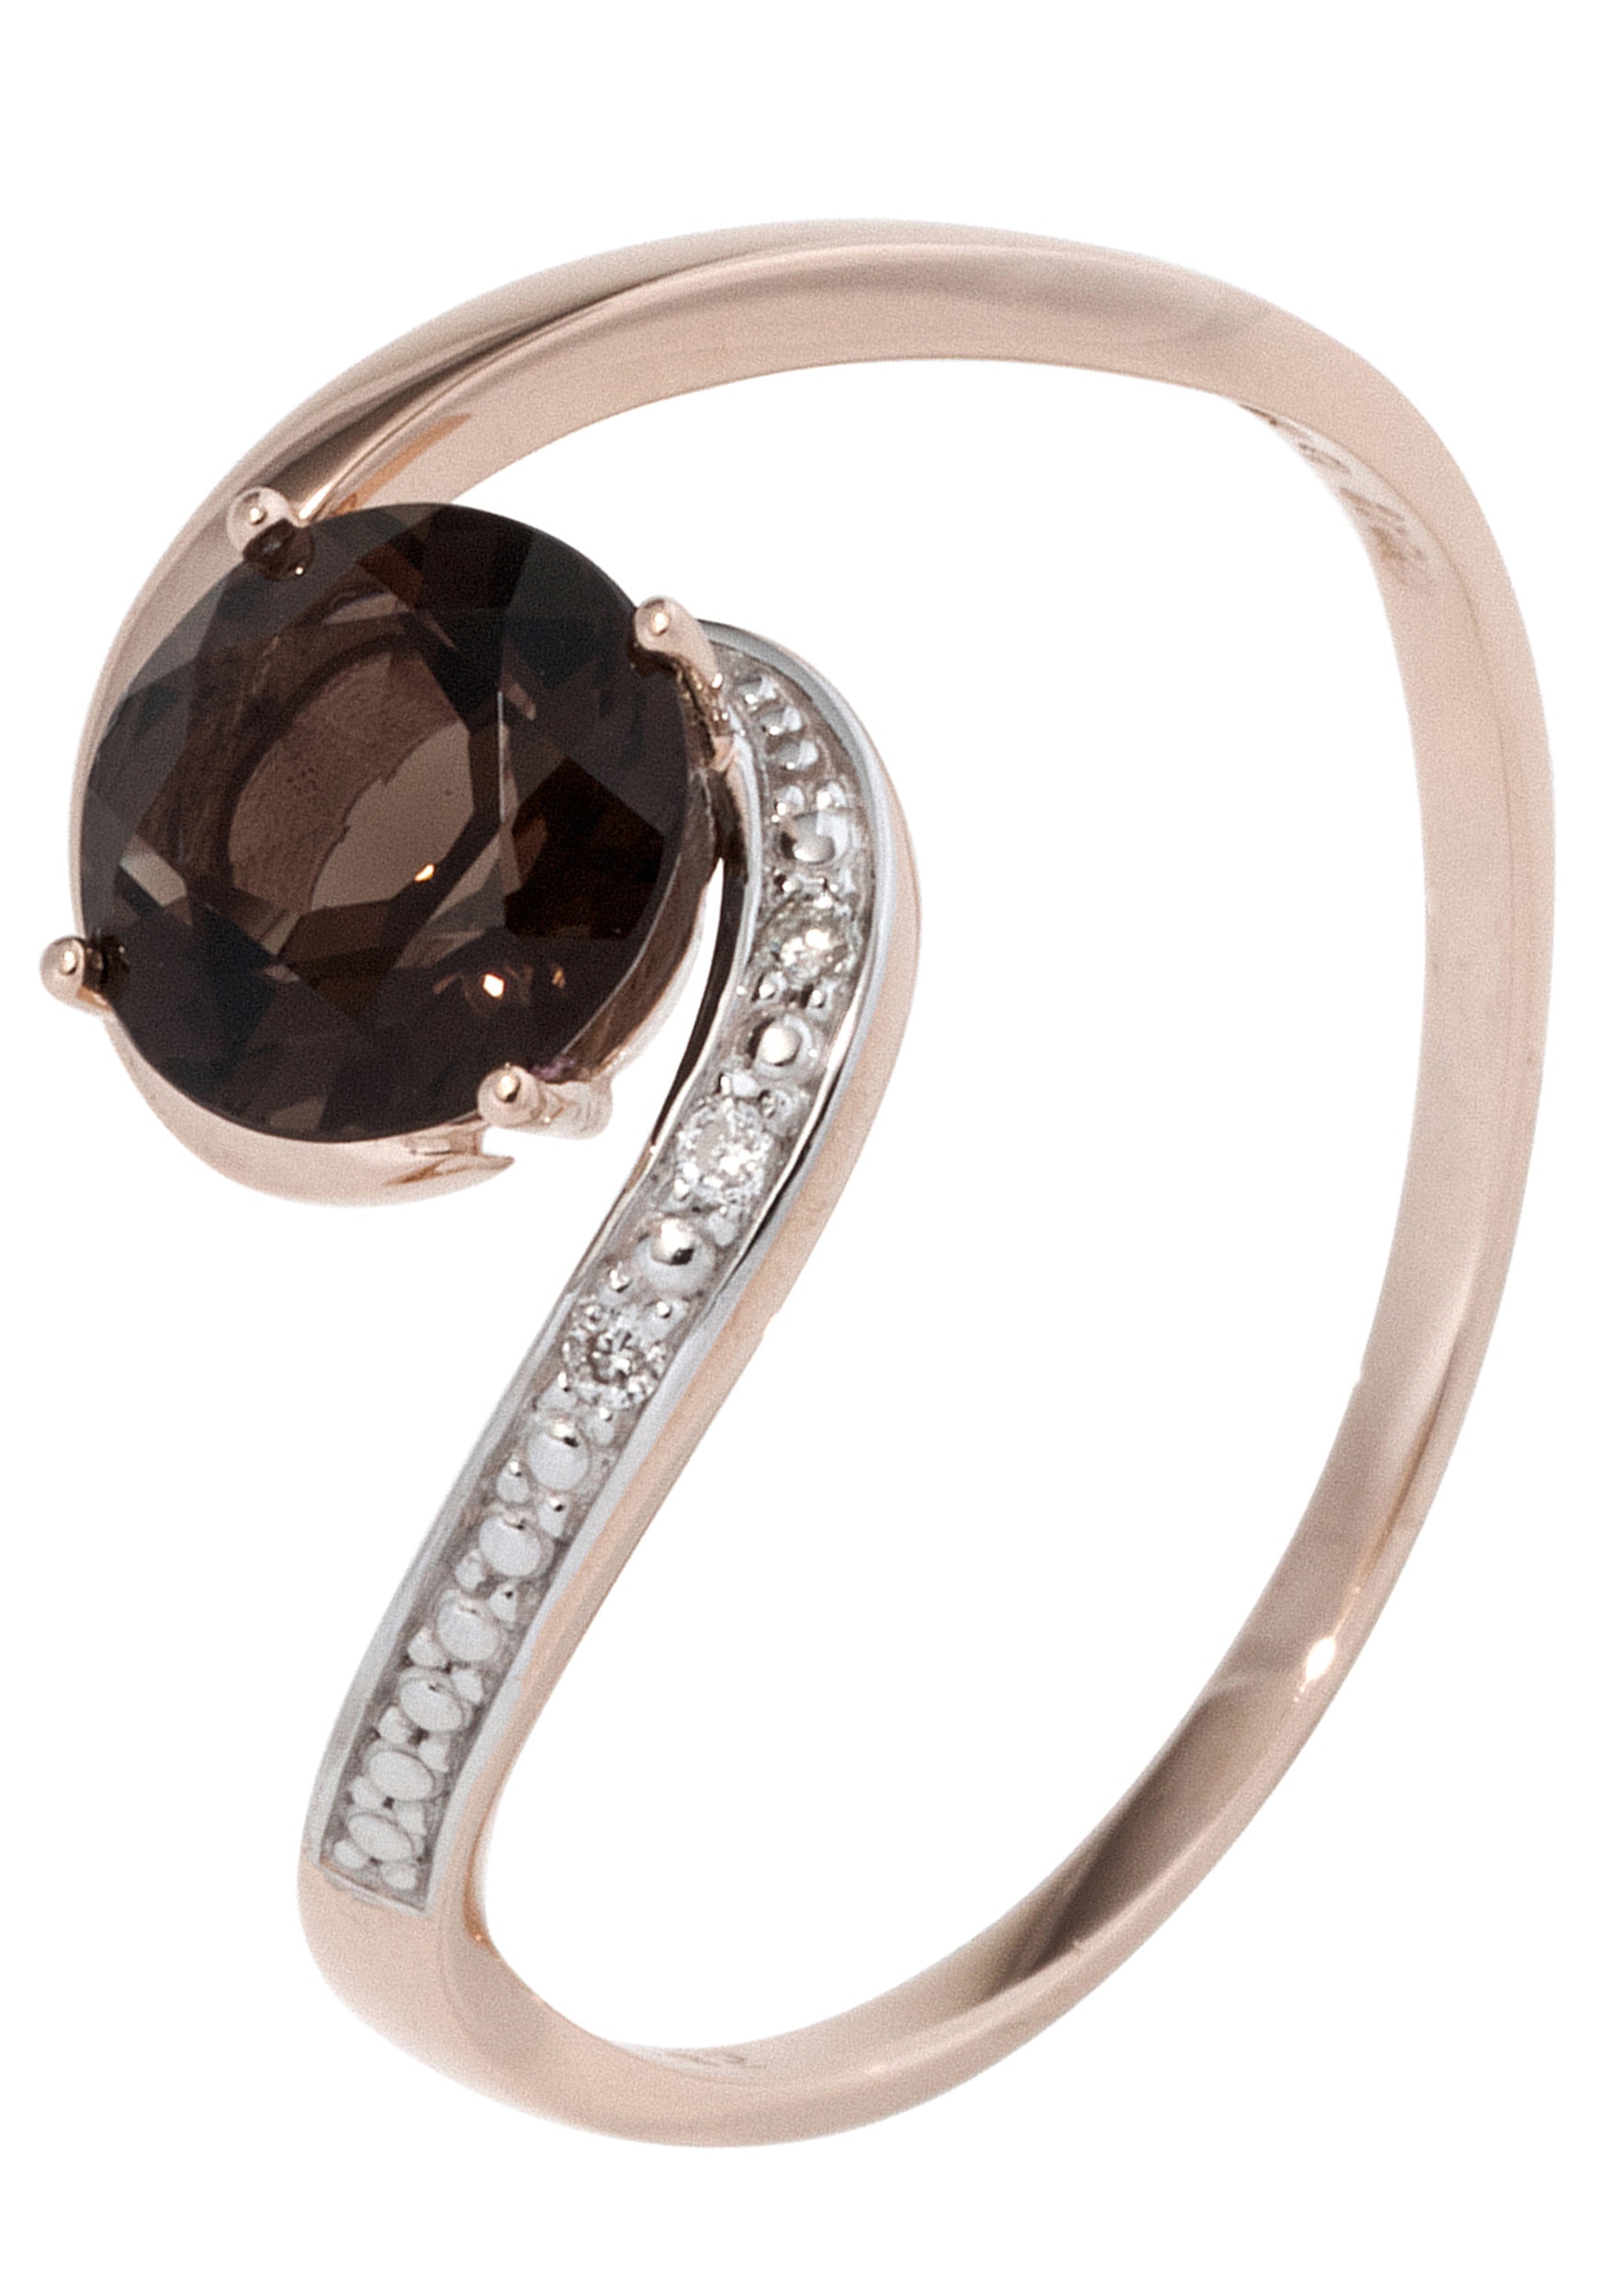 JOBO Fingerring »Ring mit Rauchquarz und 3 Diamanten«, 585 Roségold bicolor  bestellen | I'm walking